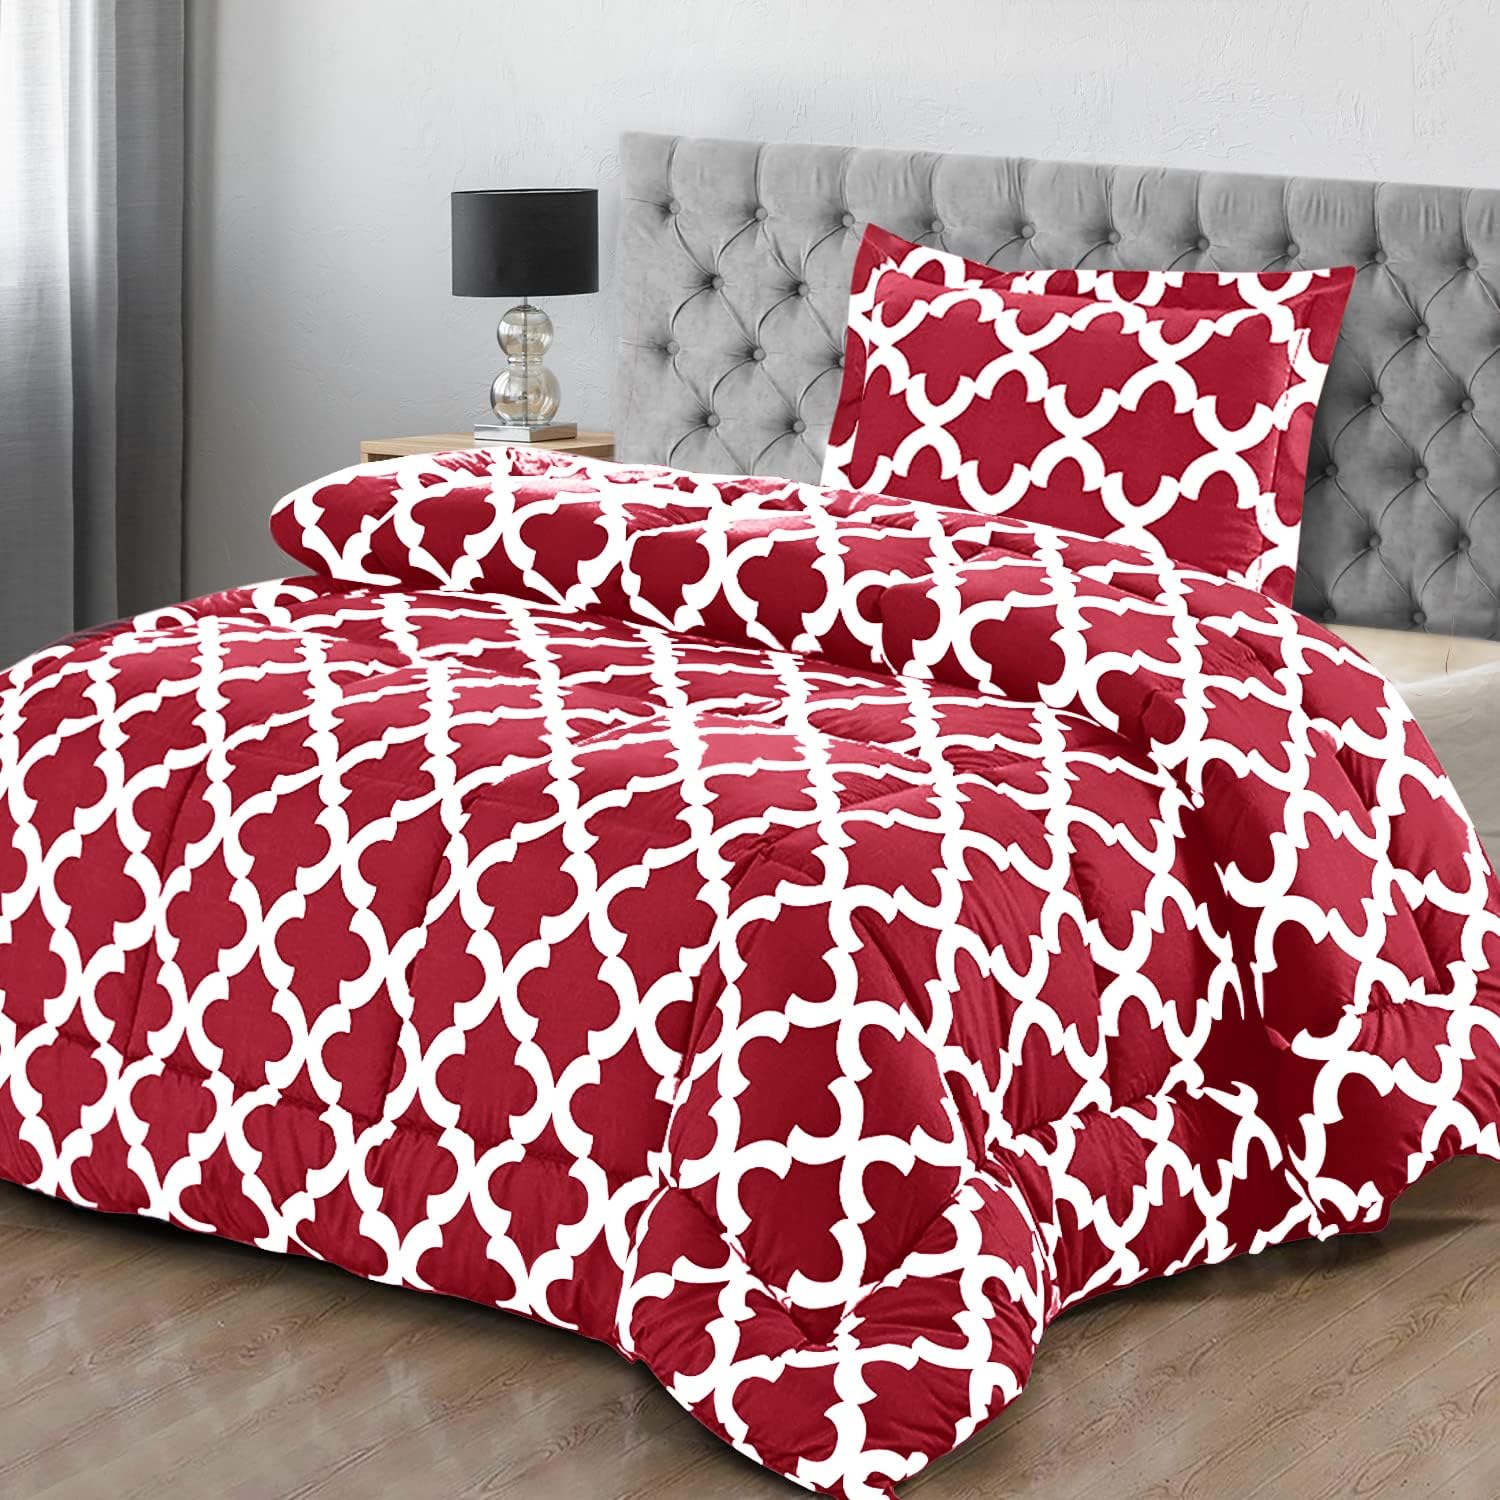 Utopia Bedding King Comforter Set (Teal) with 2 Pillow Shams - Bedding  Comforter